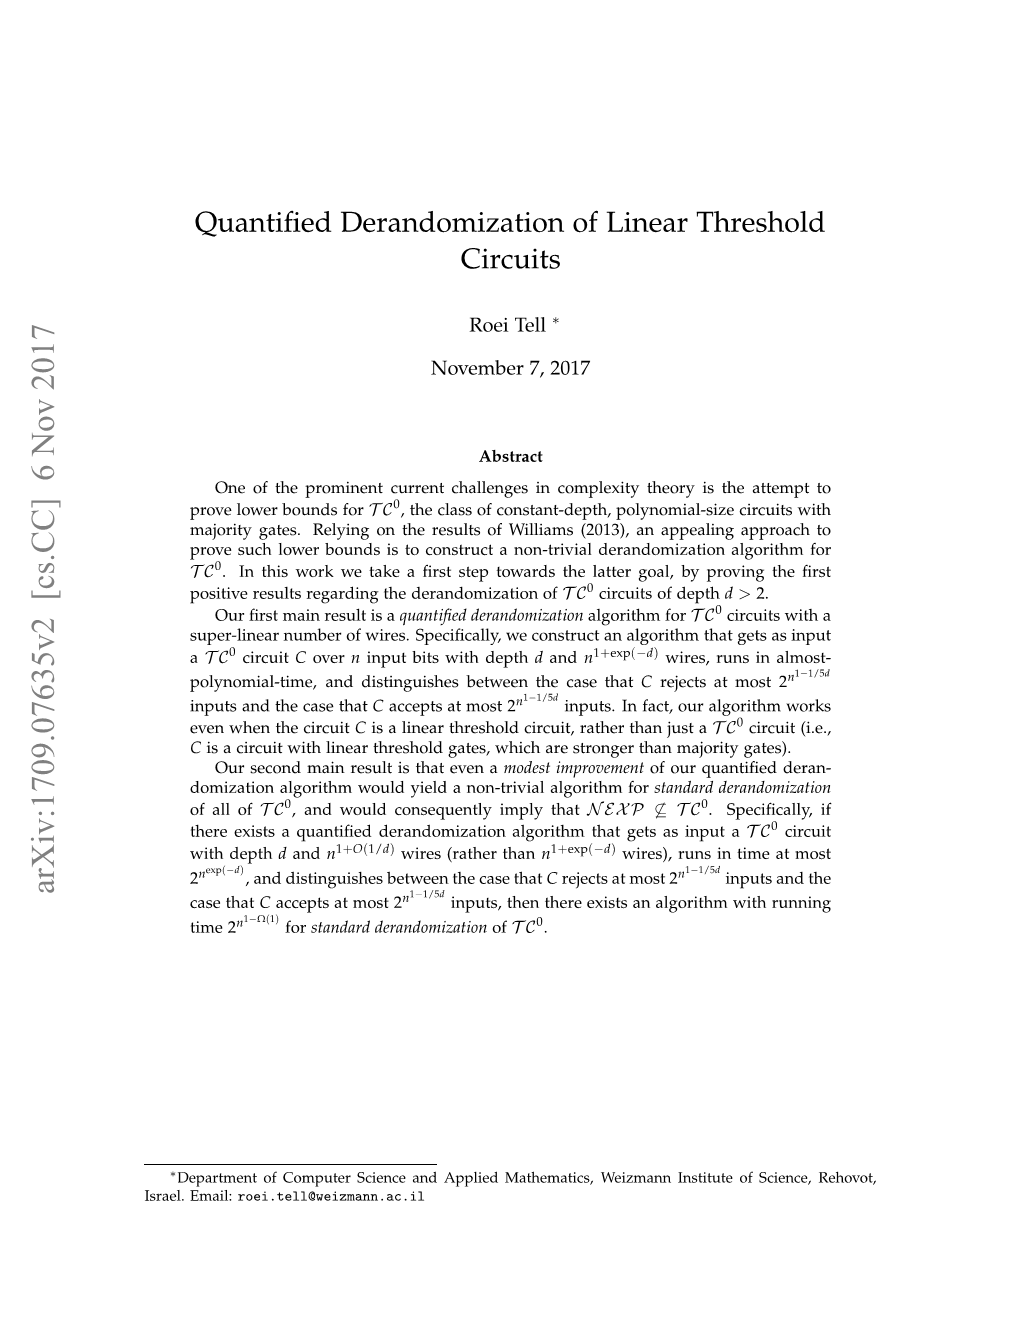 Quantified Derandomization of Linear Threshold Circuits